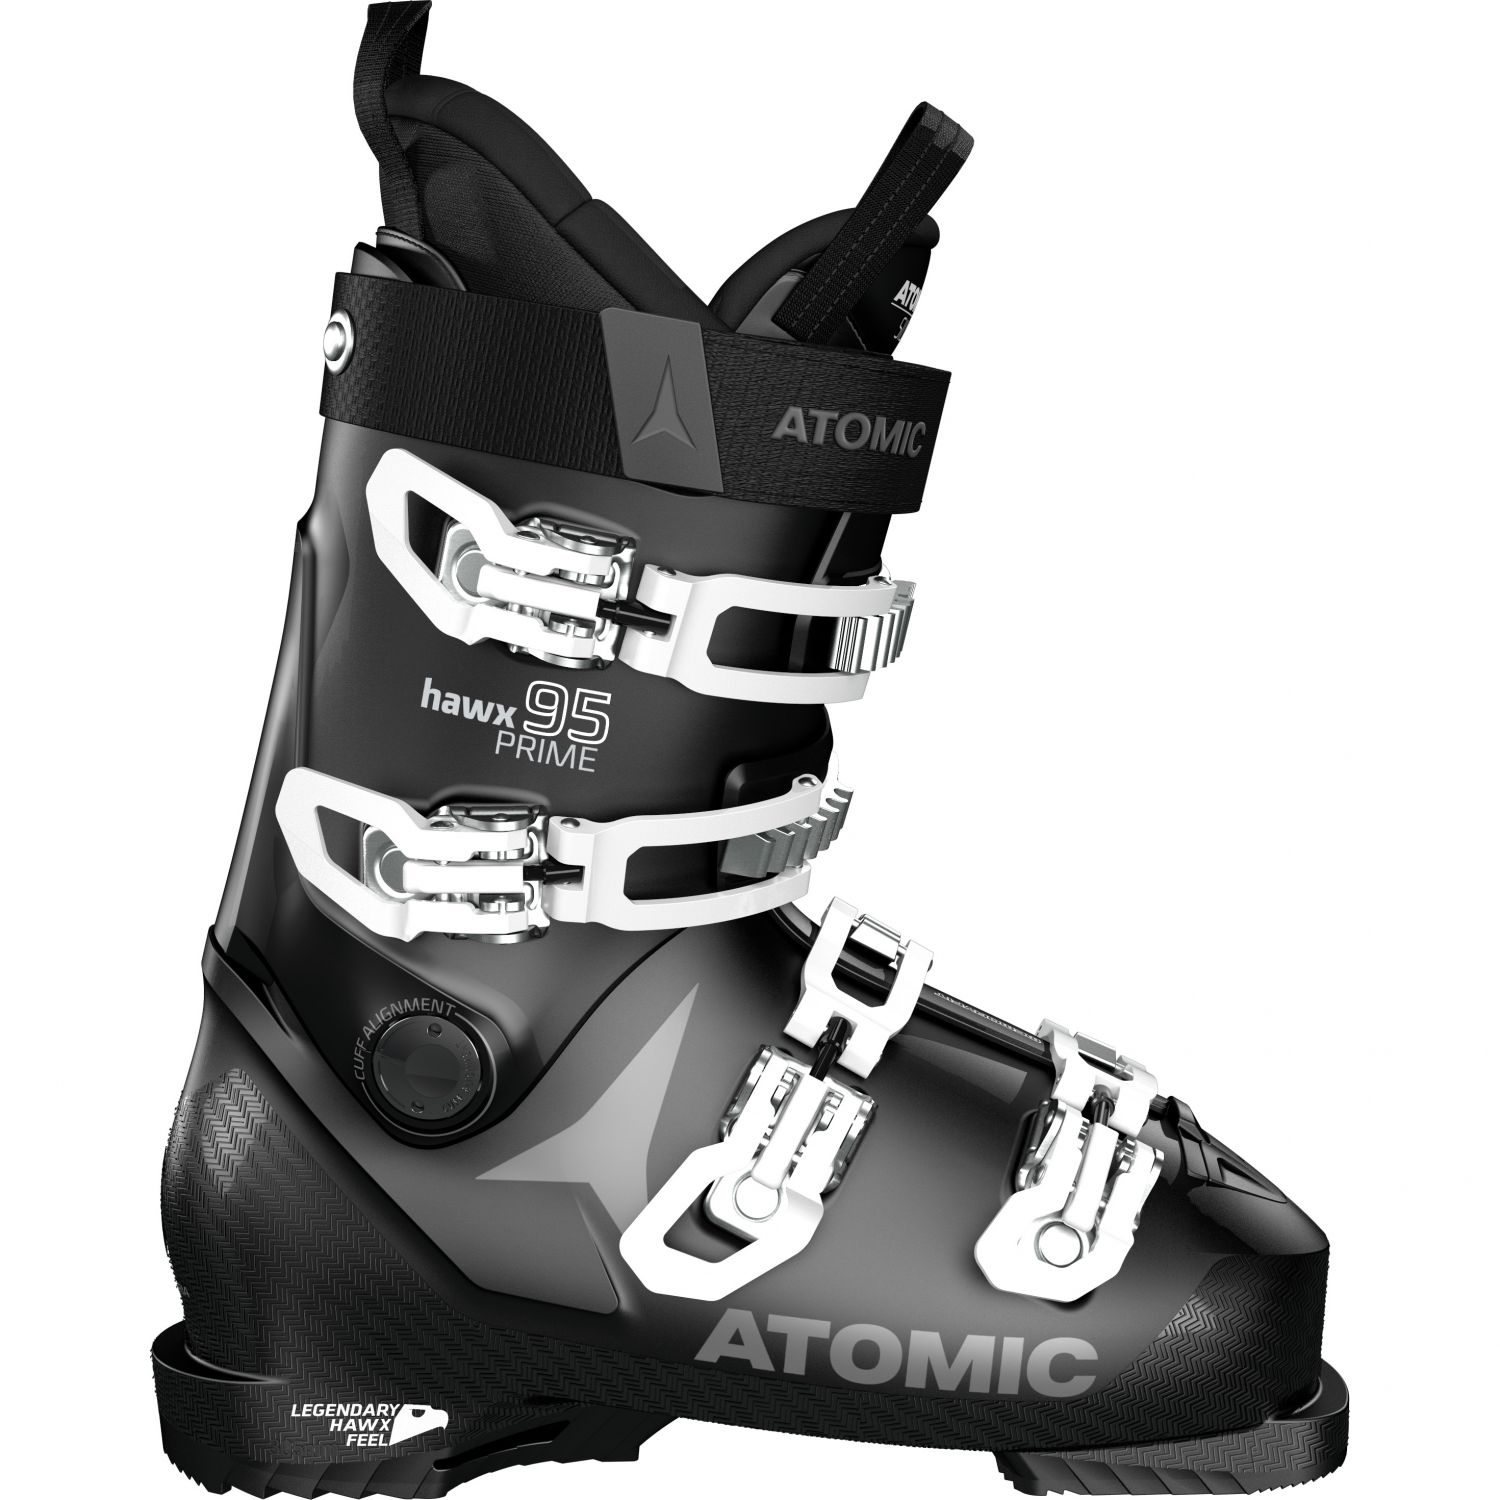 Atomic Hawx Prime 95 AM W, Skischuhe, schwarz